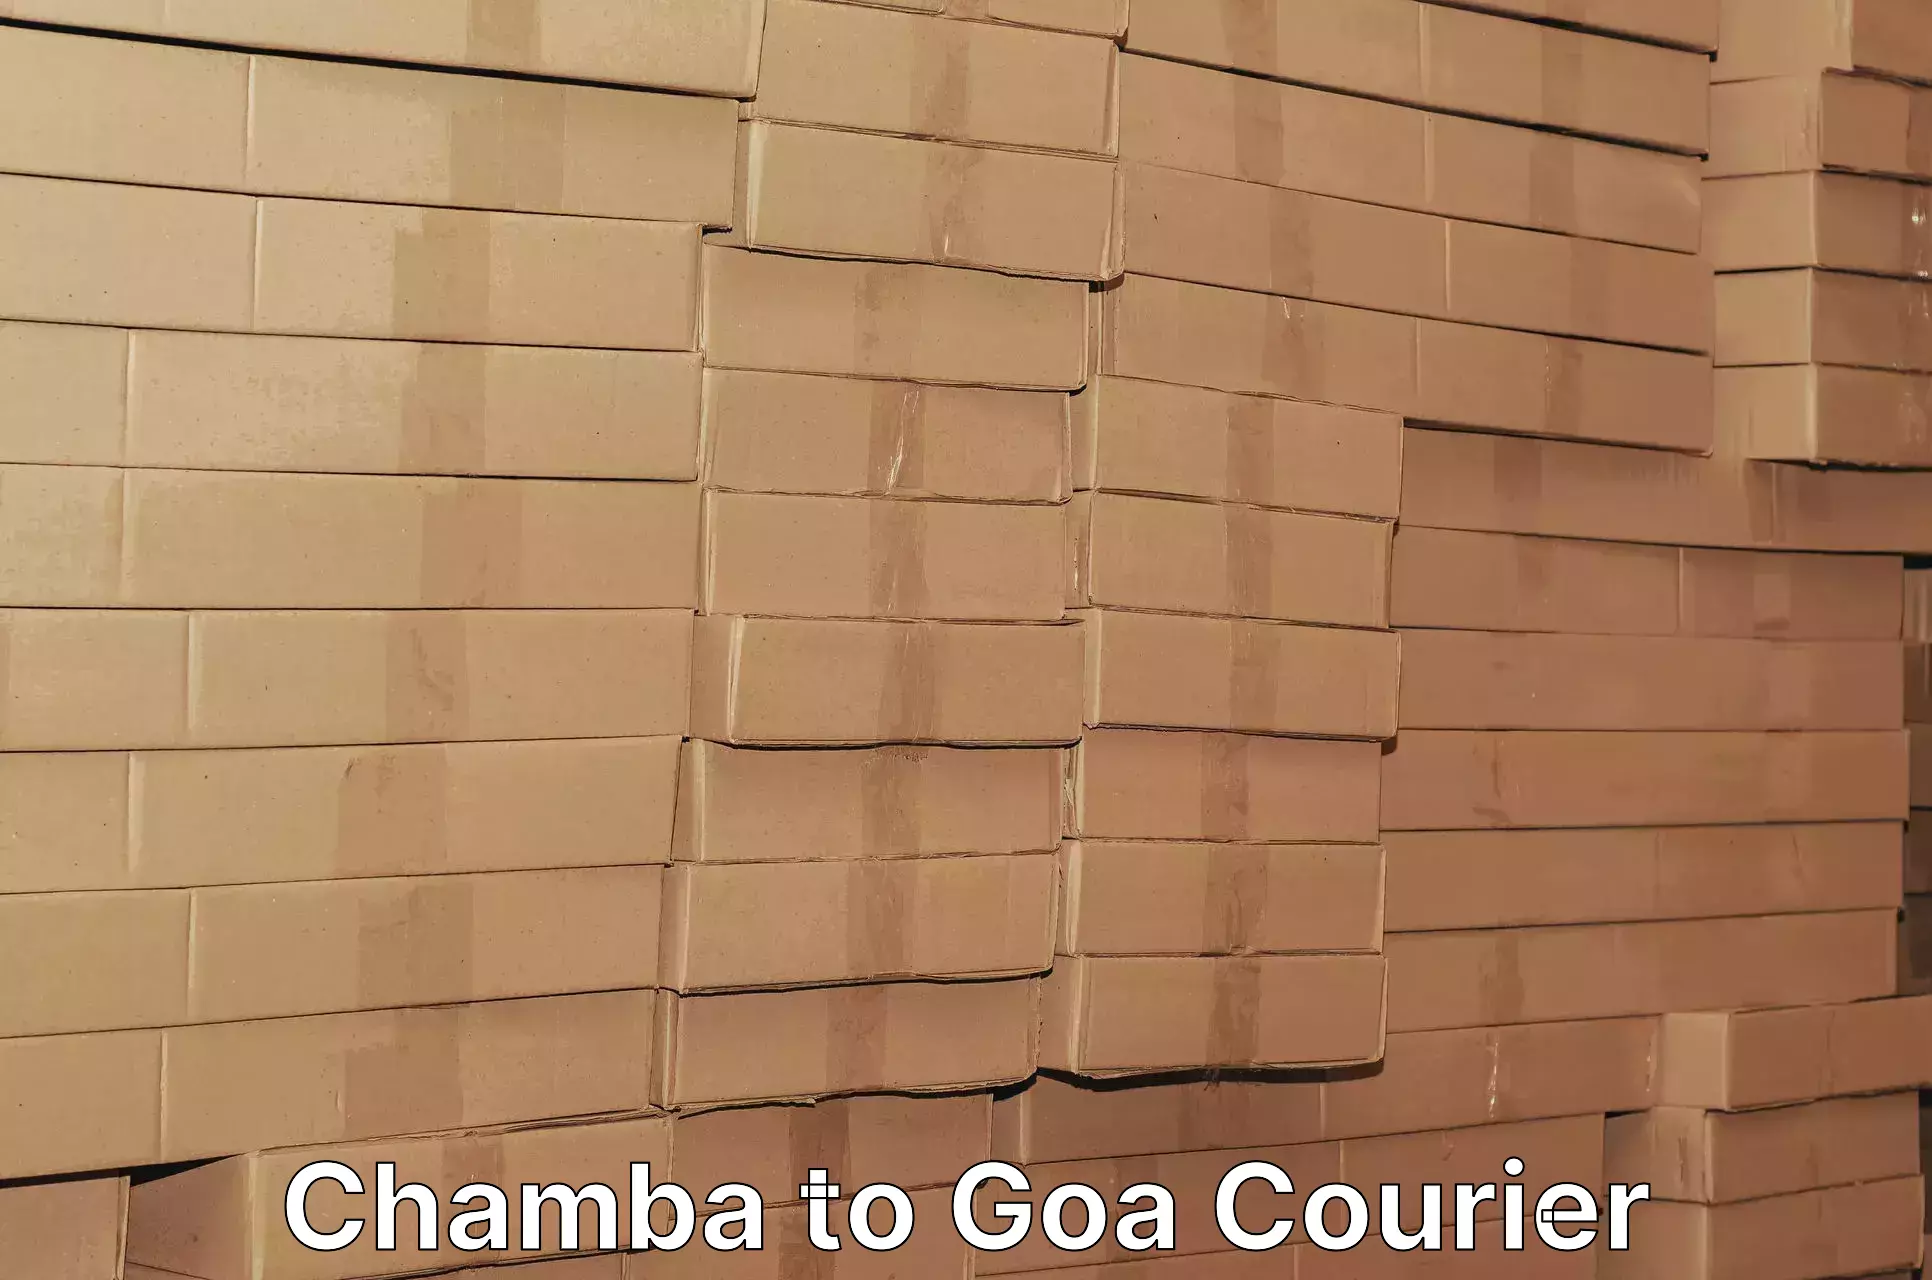 Delivery service partnership Chamba to Goa